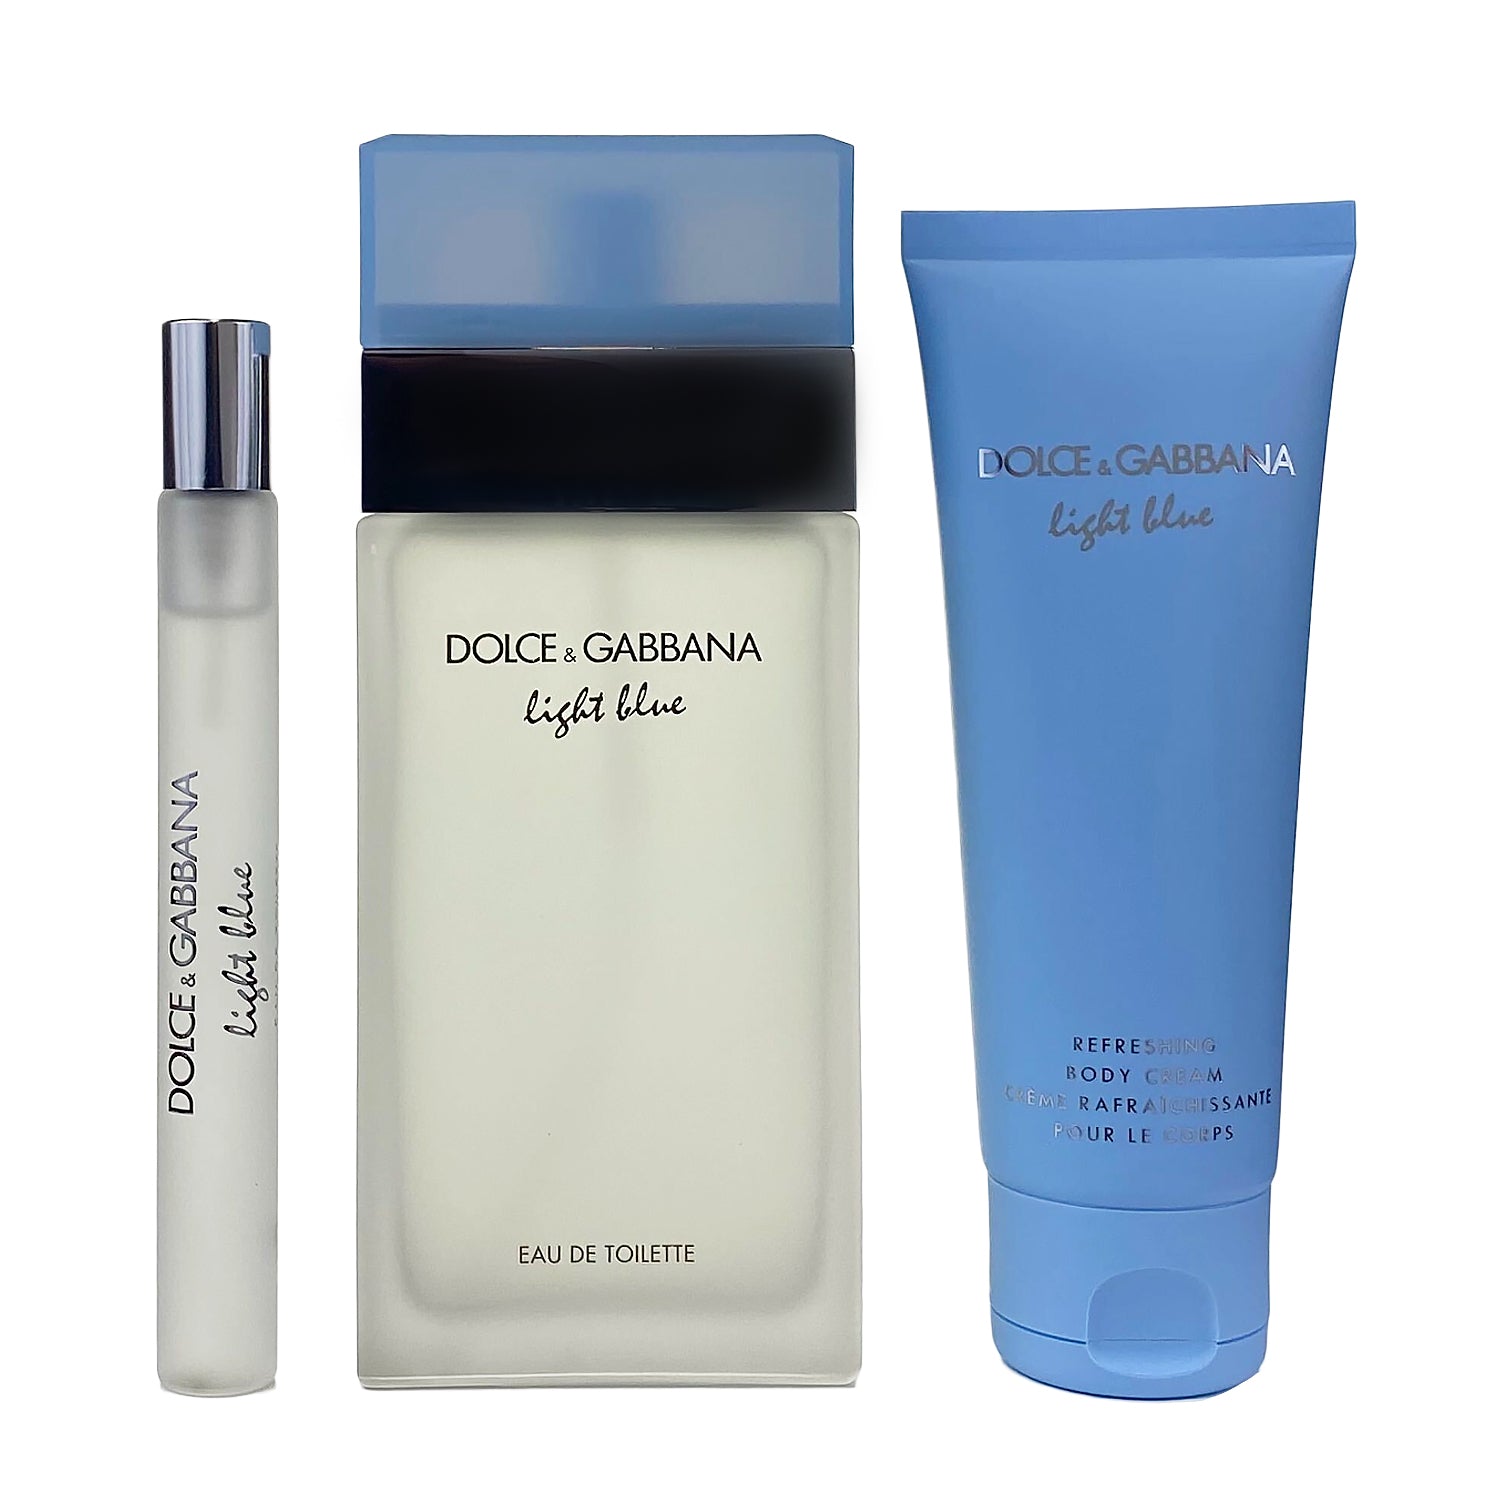 dolce & gabbana light blue perfume gift set